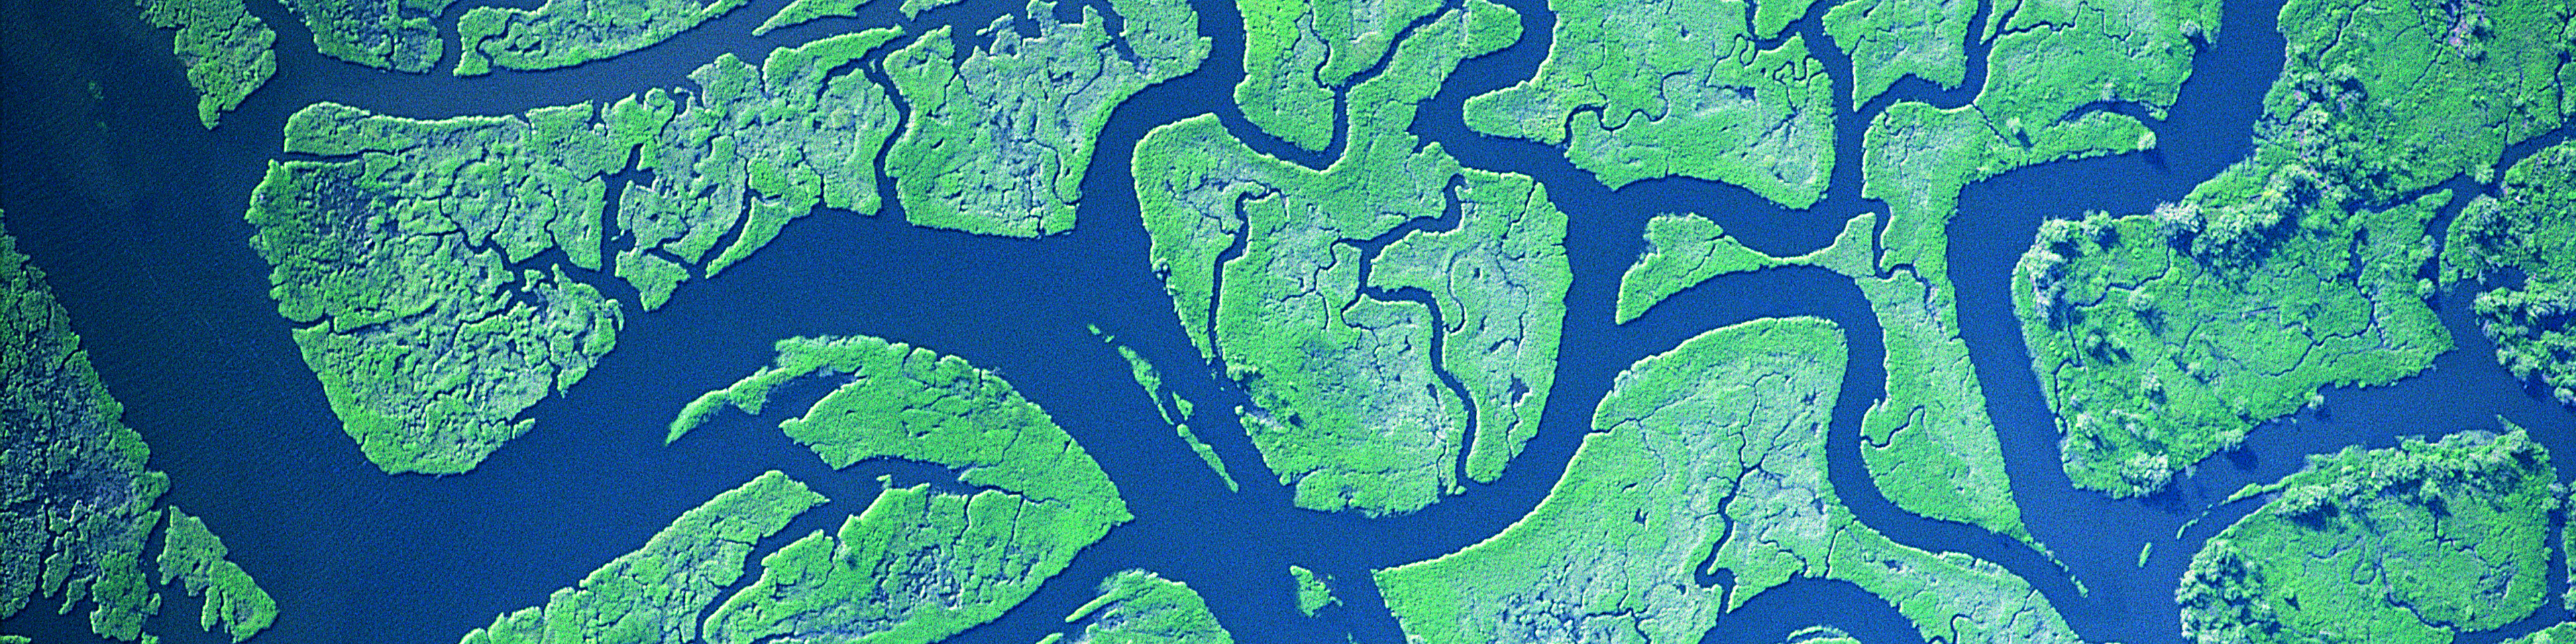 River delta patterns, Columbia River, Western Washington and Western Oregon, USA